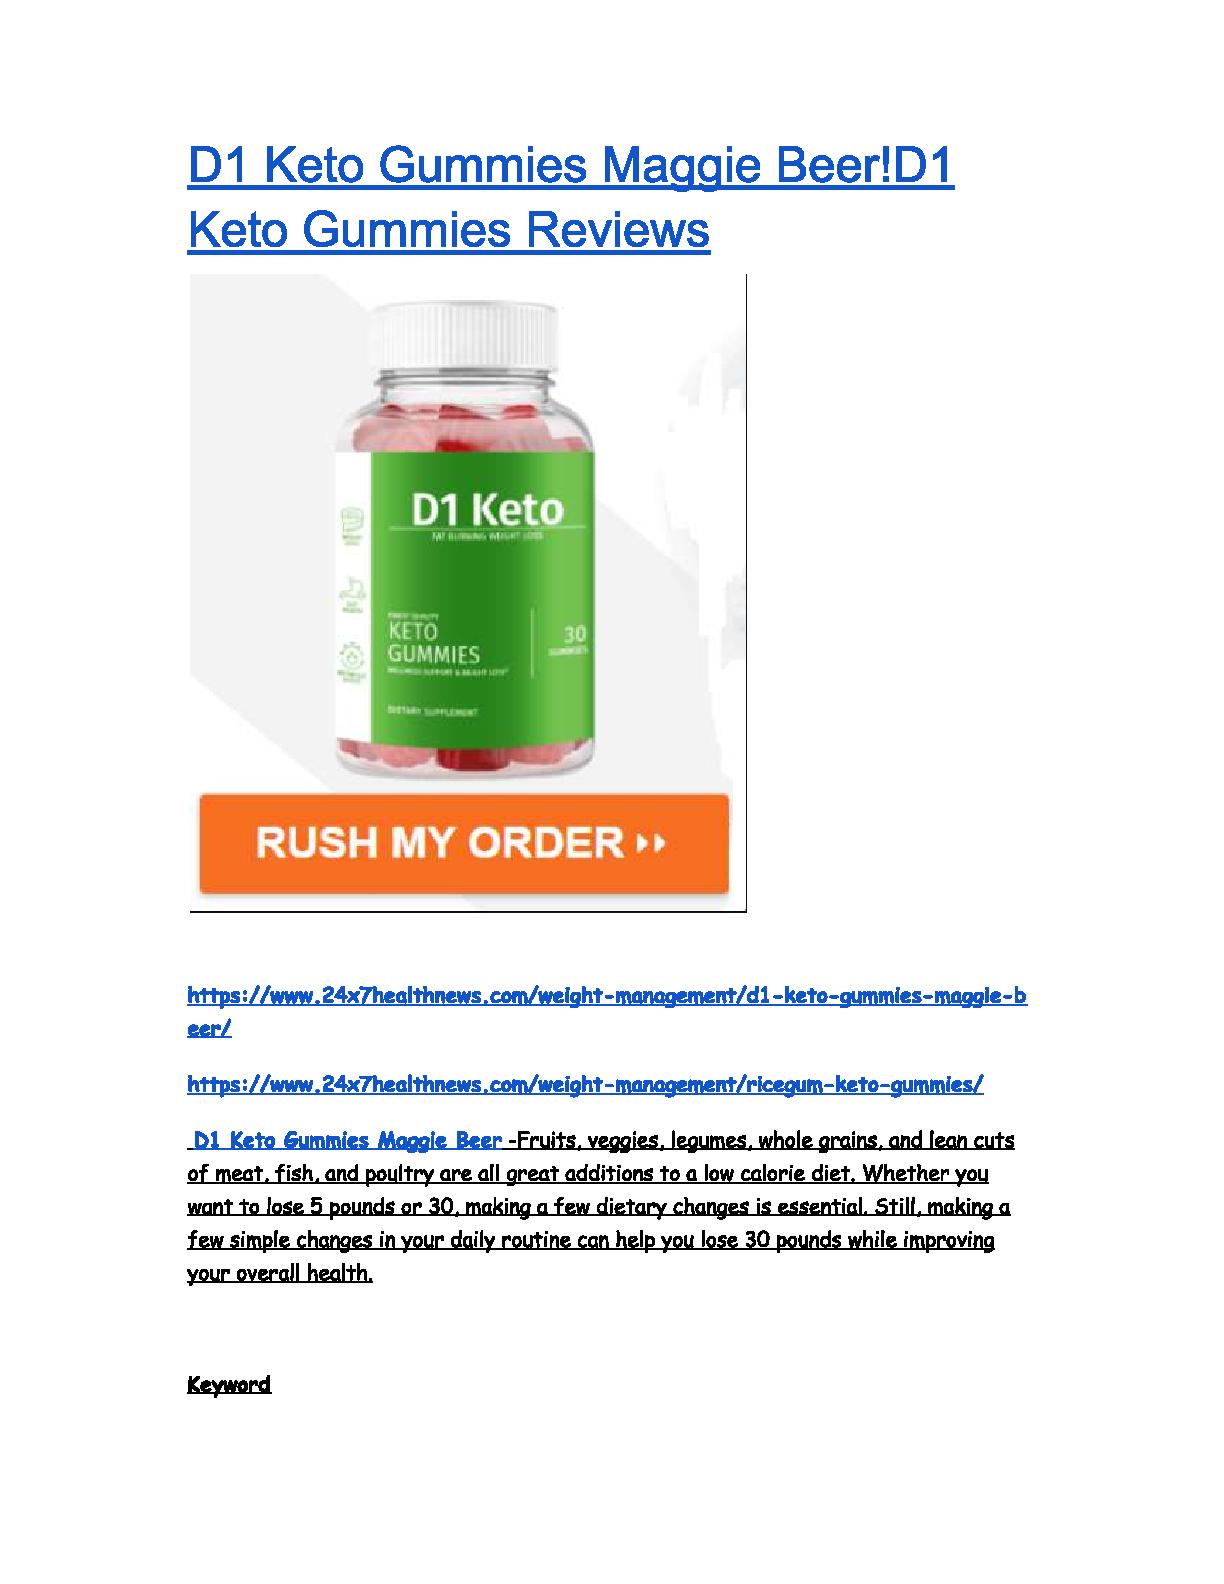 D1 Keto Gummies Maggie Beer - Google Docs | PDF Host